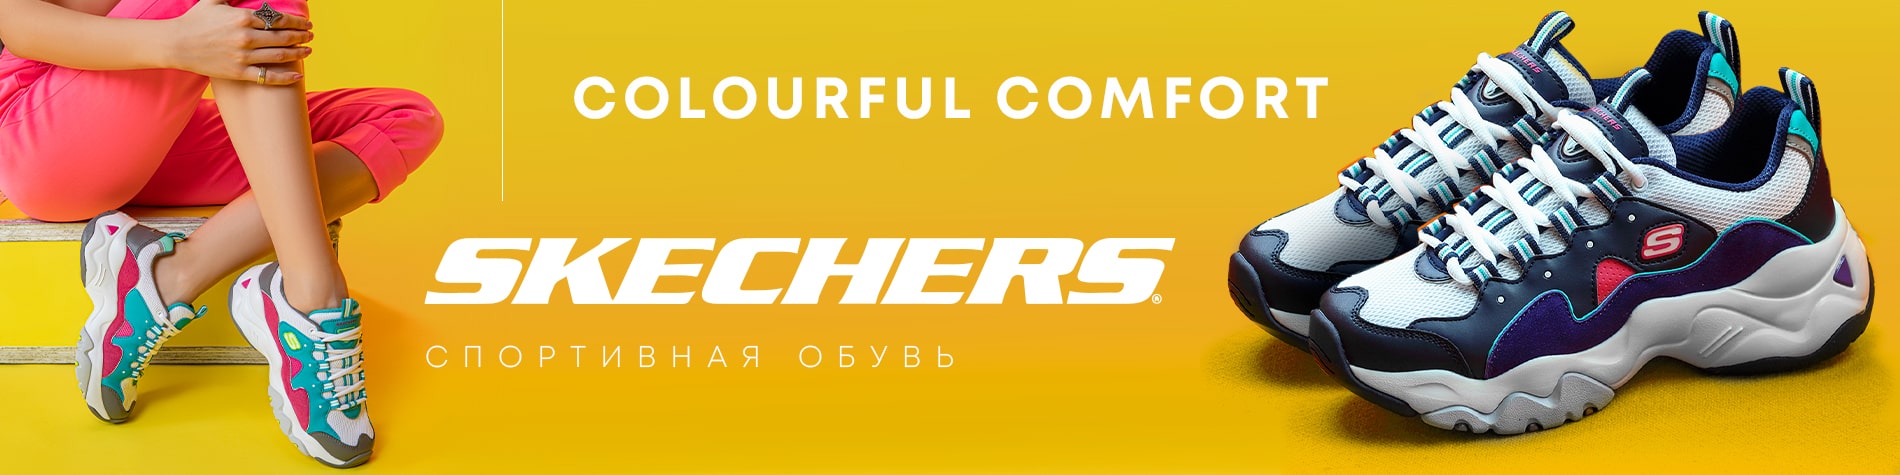 Skechers Скетчерс: кроссовки и обувь бренда